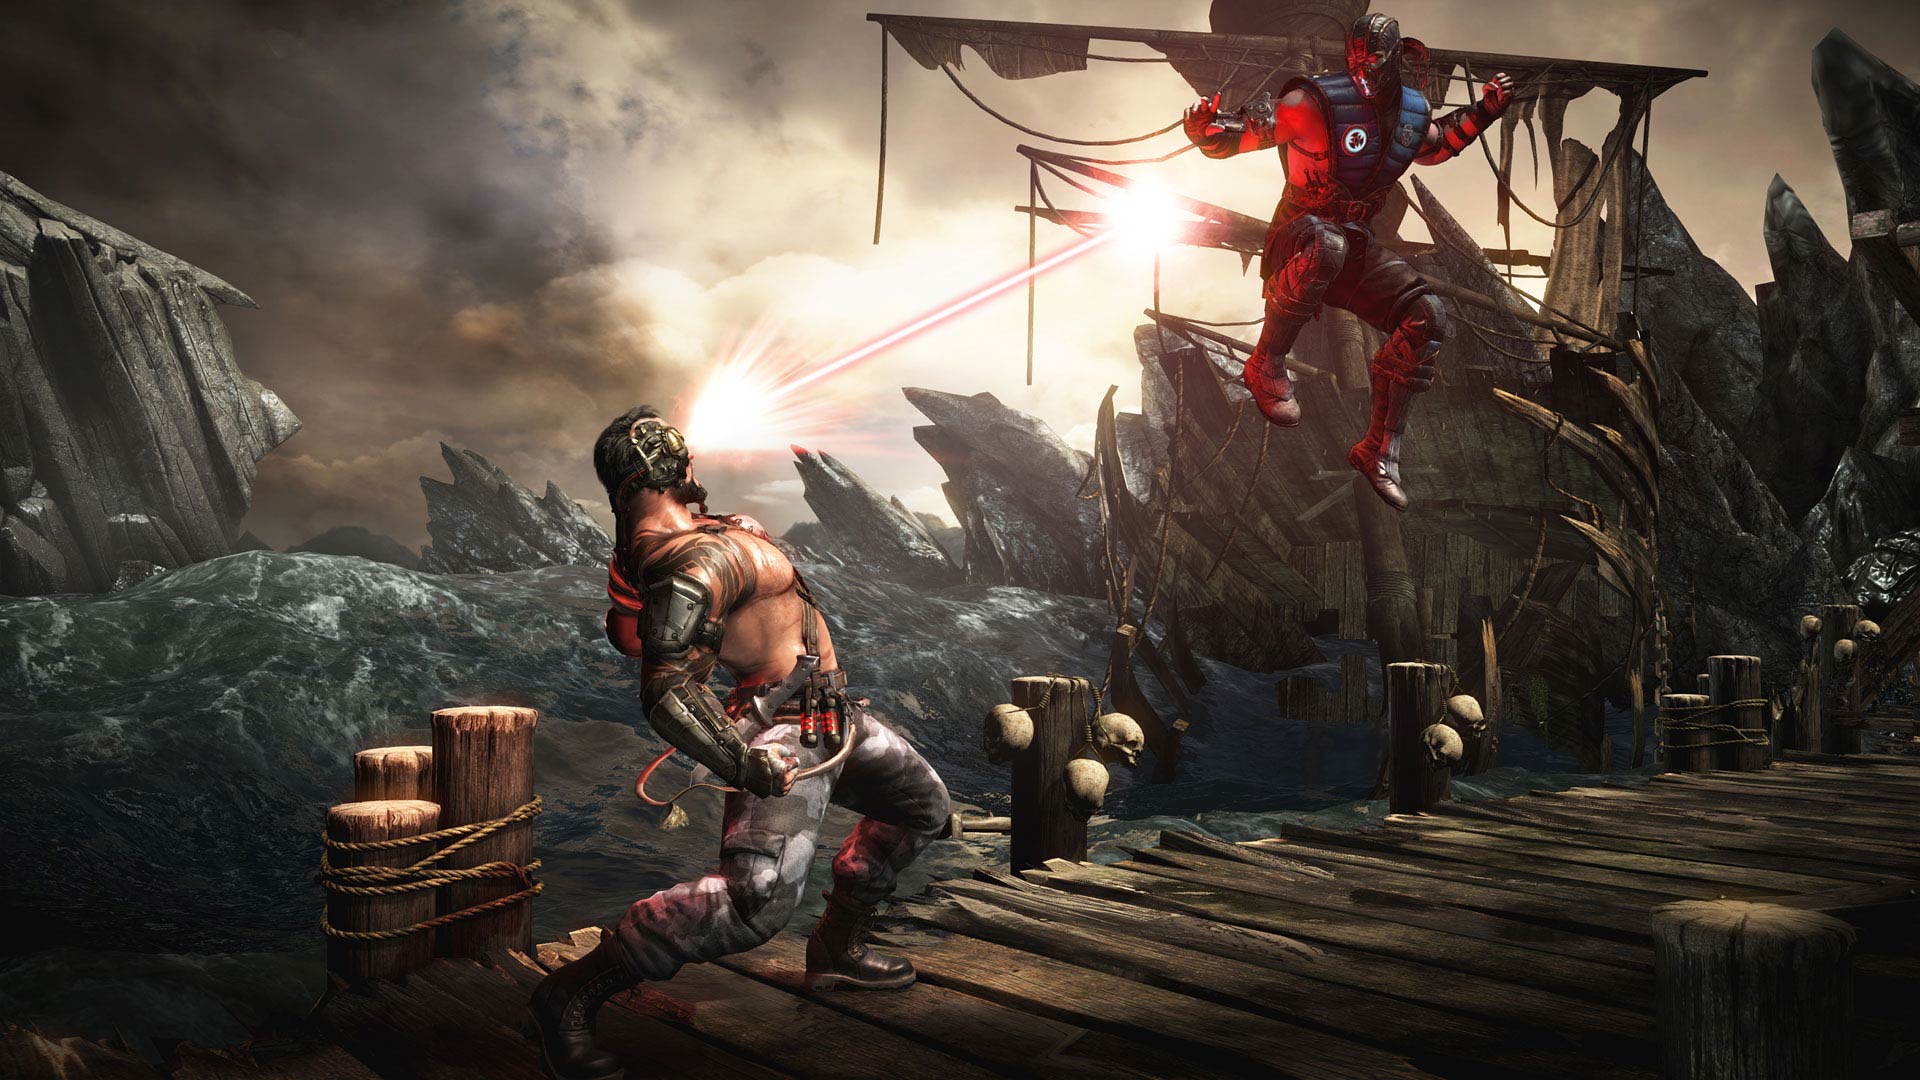 Save 75% on Mortal Kombat X on Steam